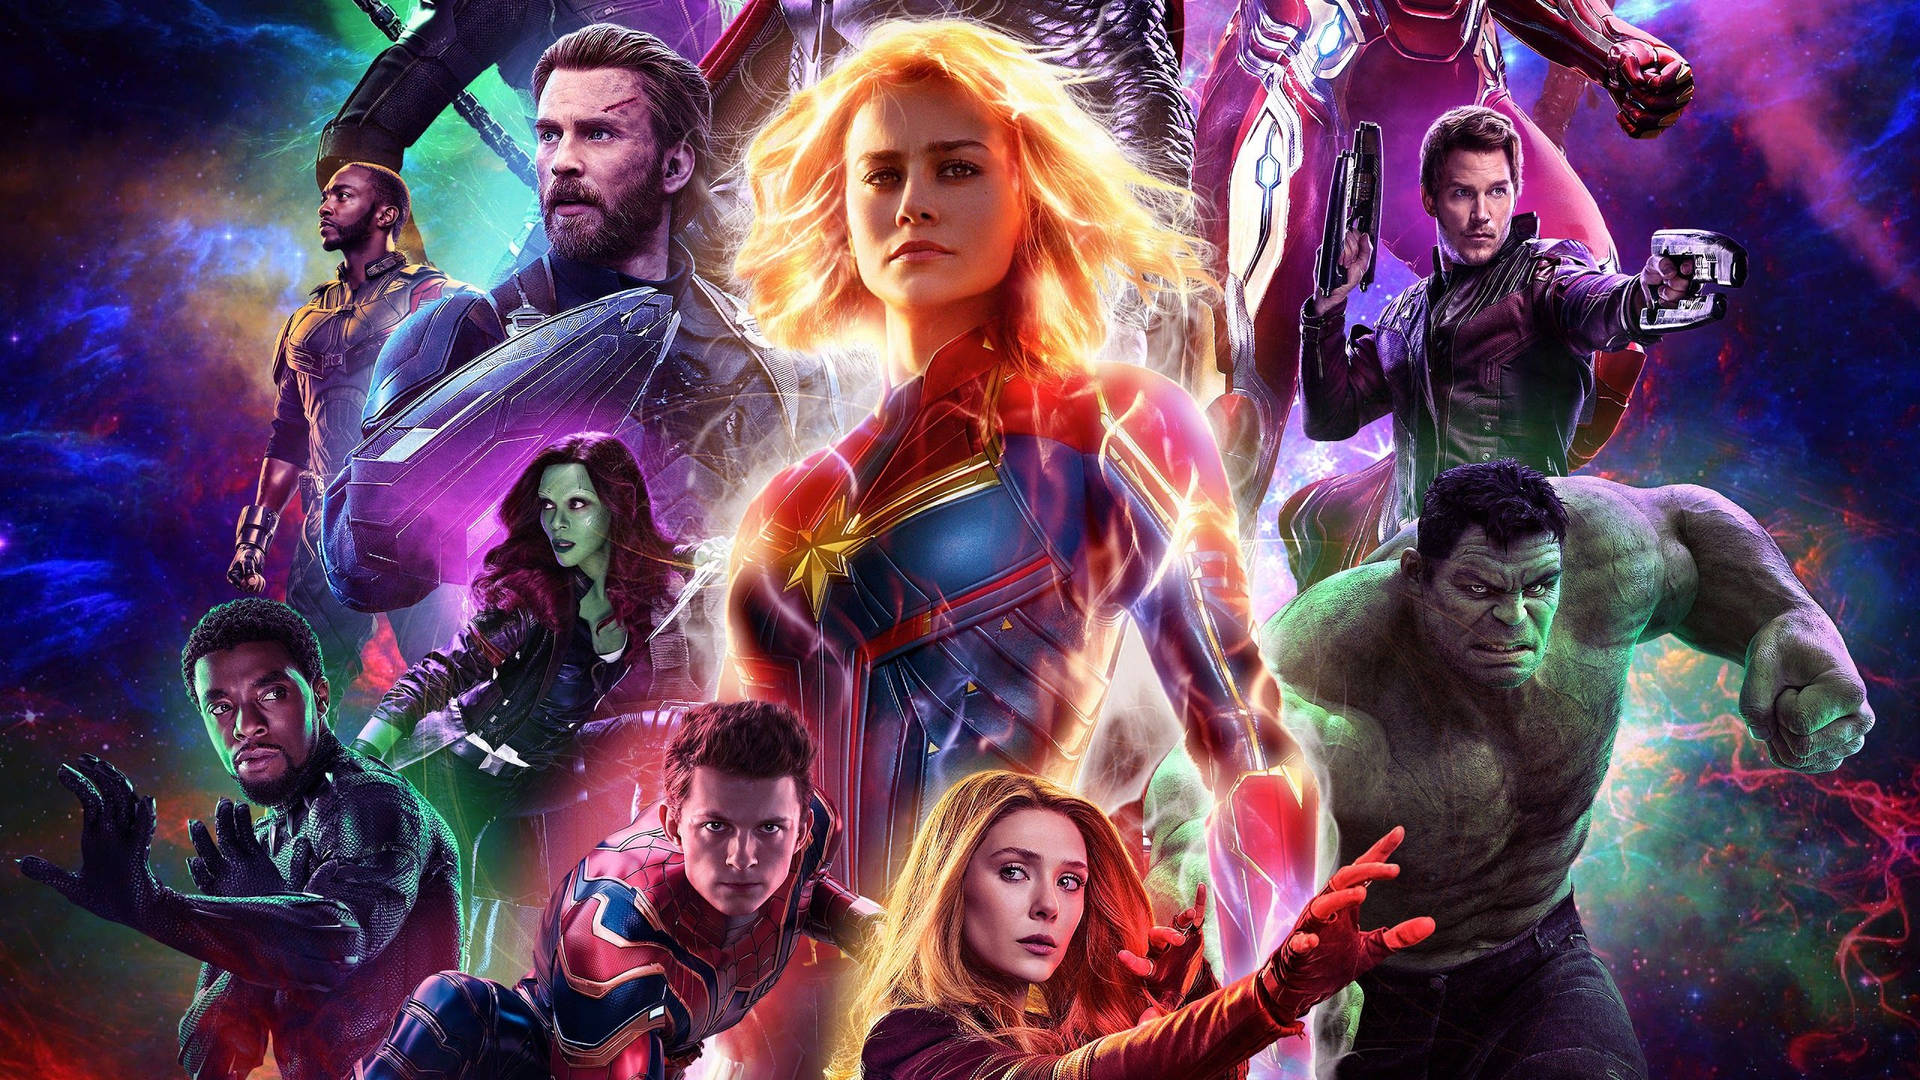 Epic Battle - The Avengers In Action In 4k Wallpaper